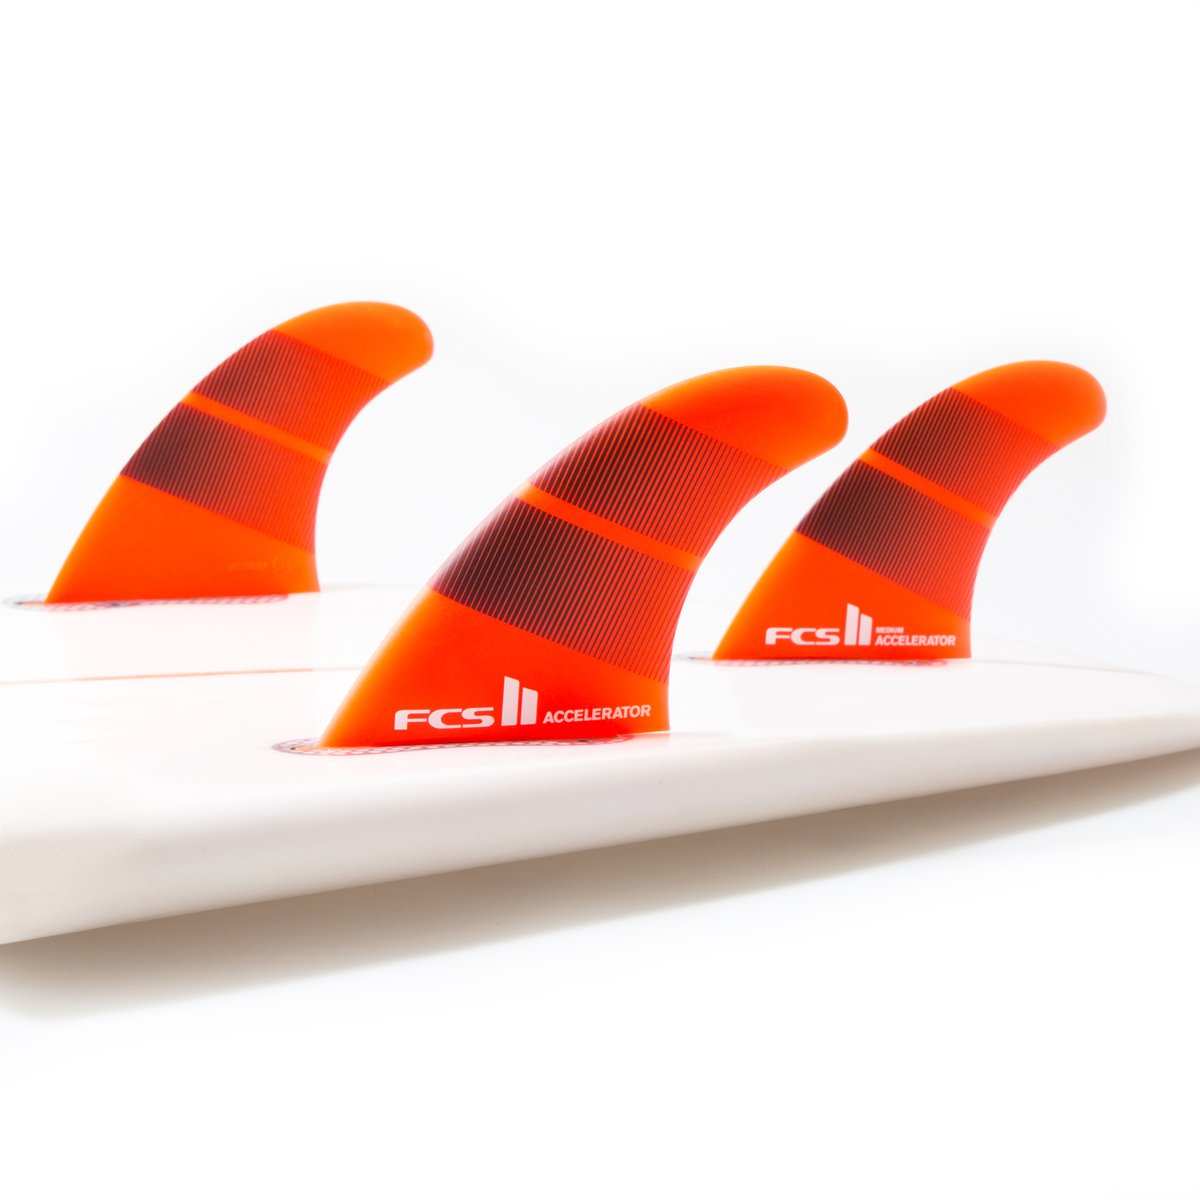 3 Fins FCS Accelerator Eco Neo Glass Surfboard Fins Tri Fin Set 